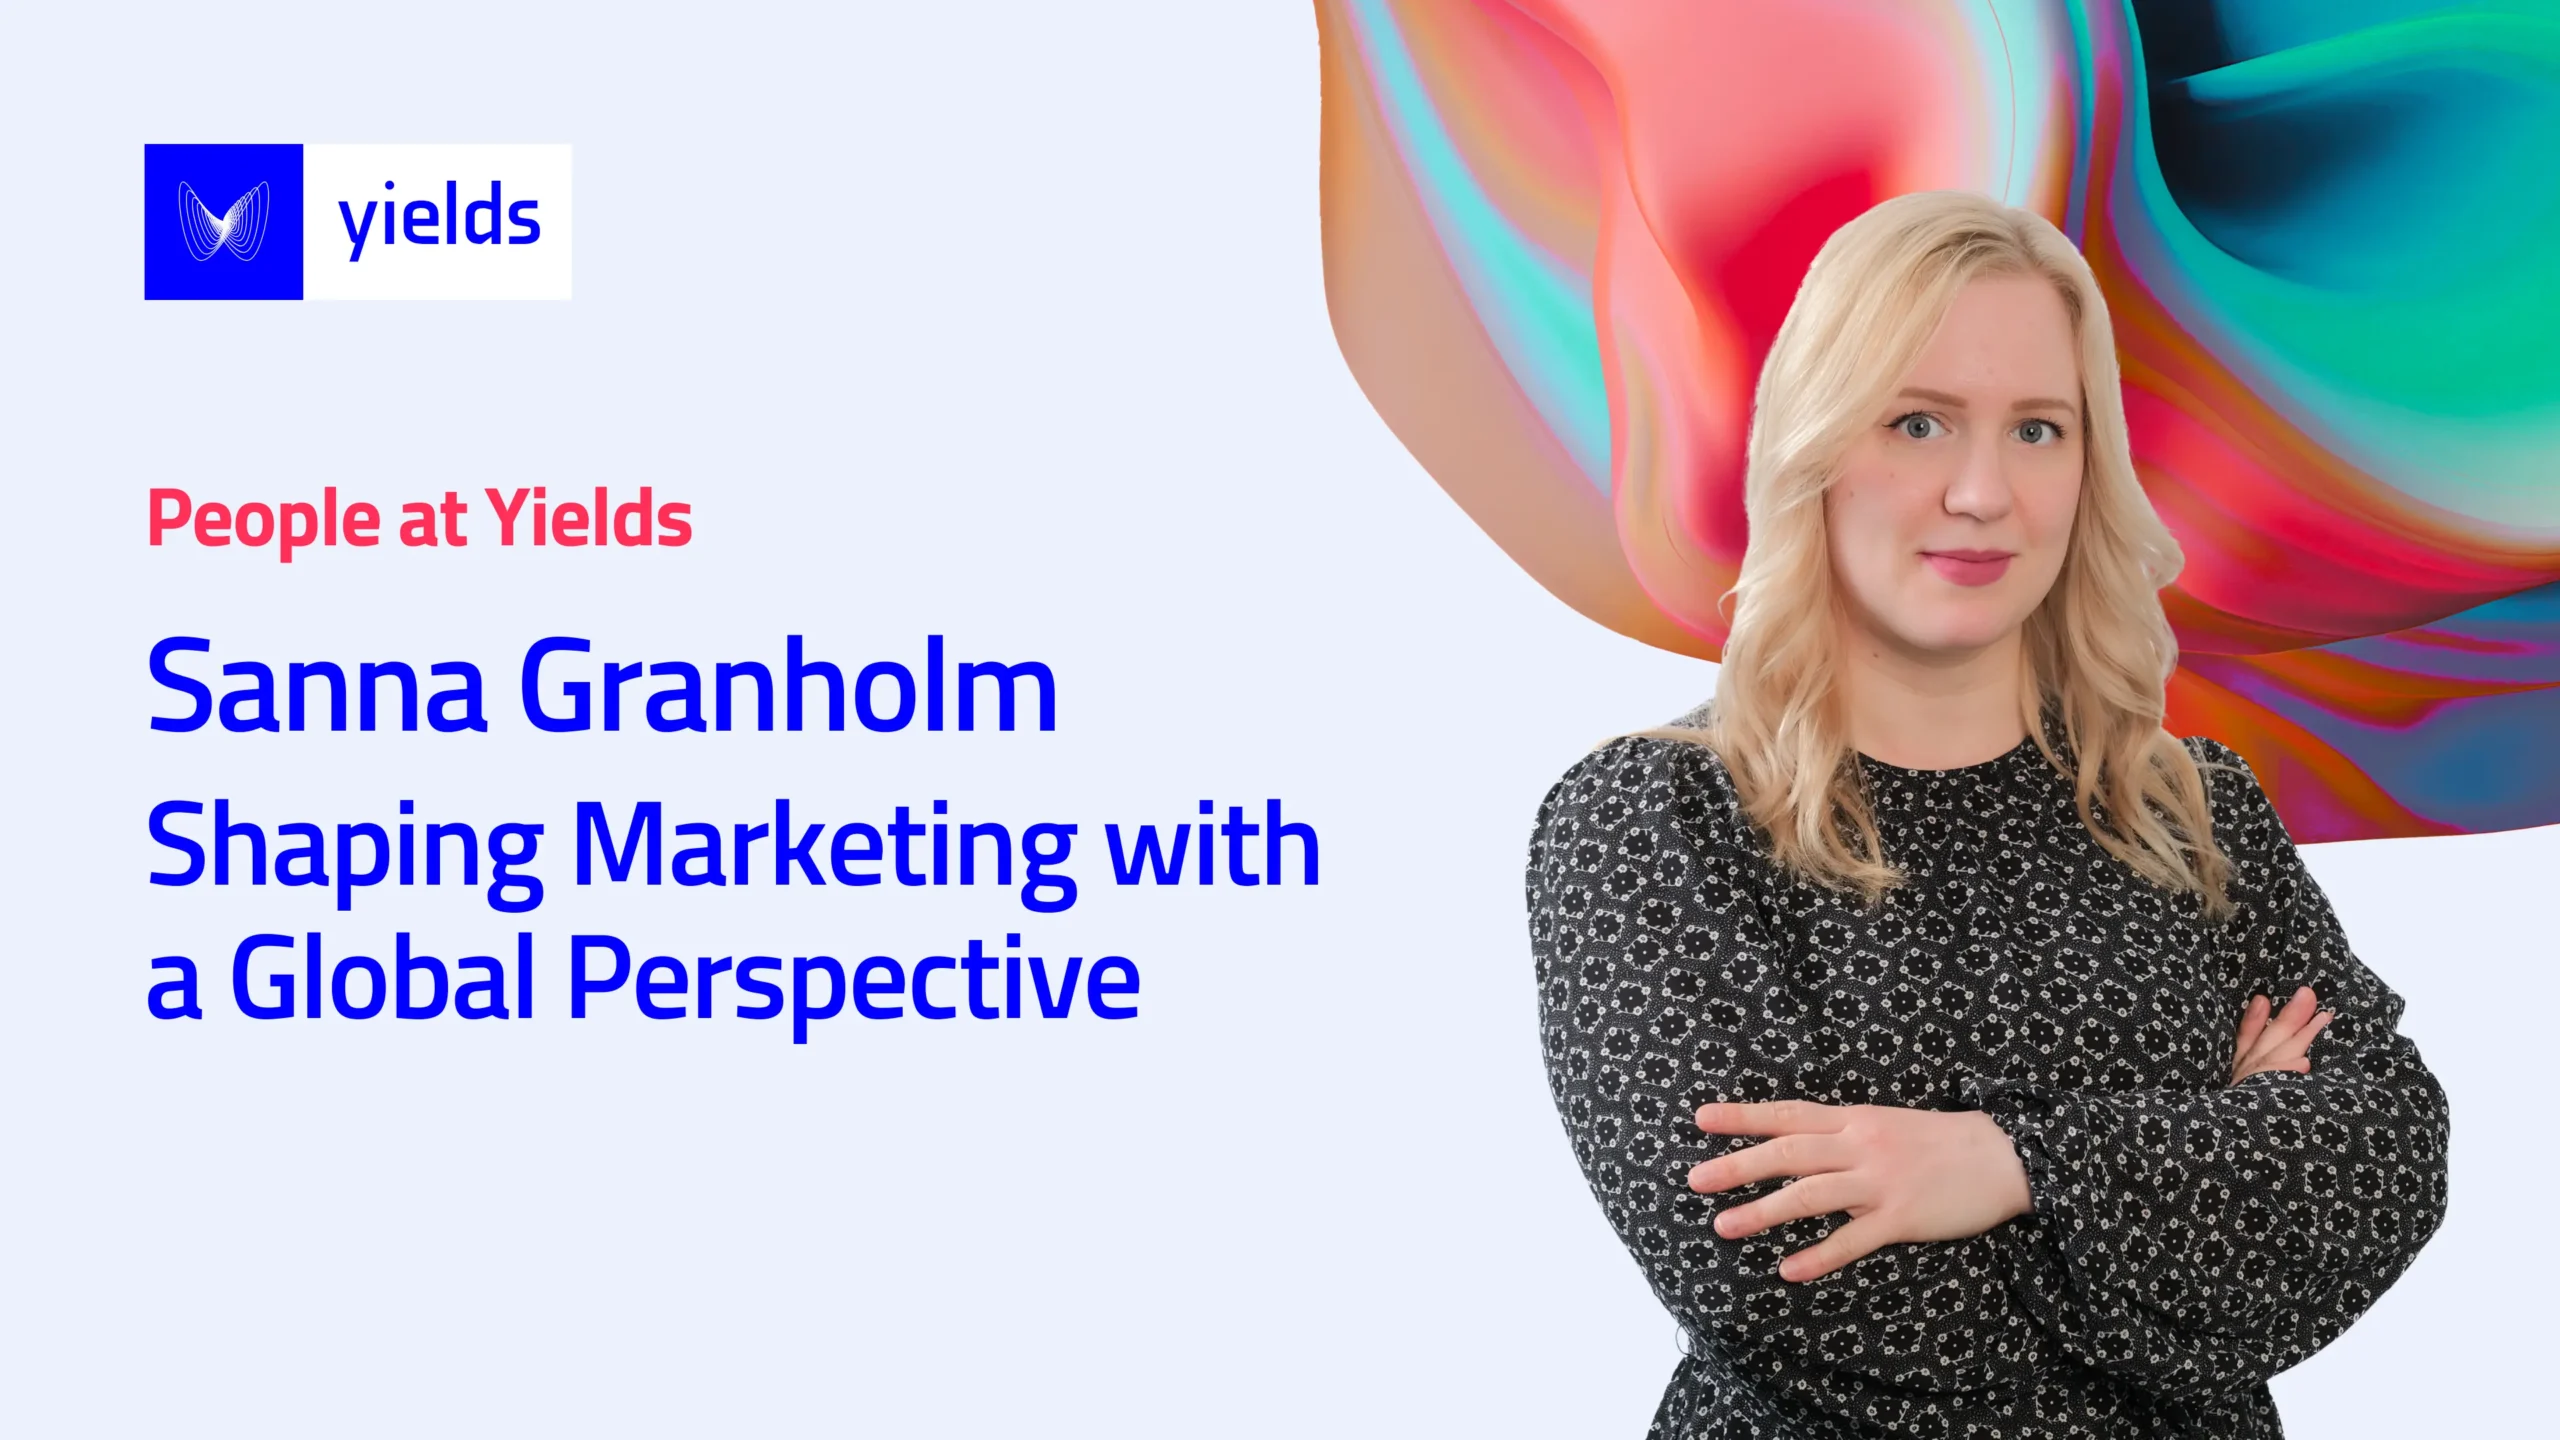 Sanna Granholm: Head of Marketing at Yields